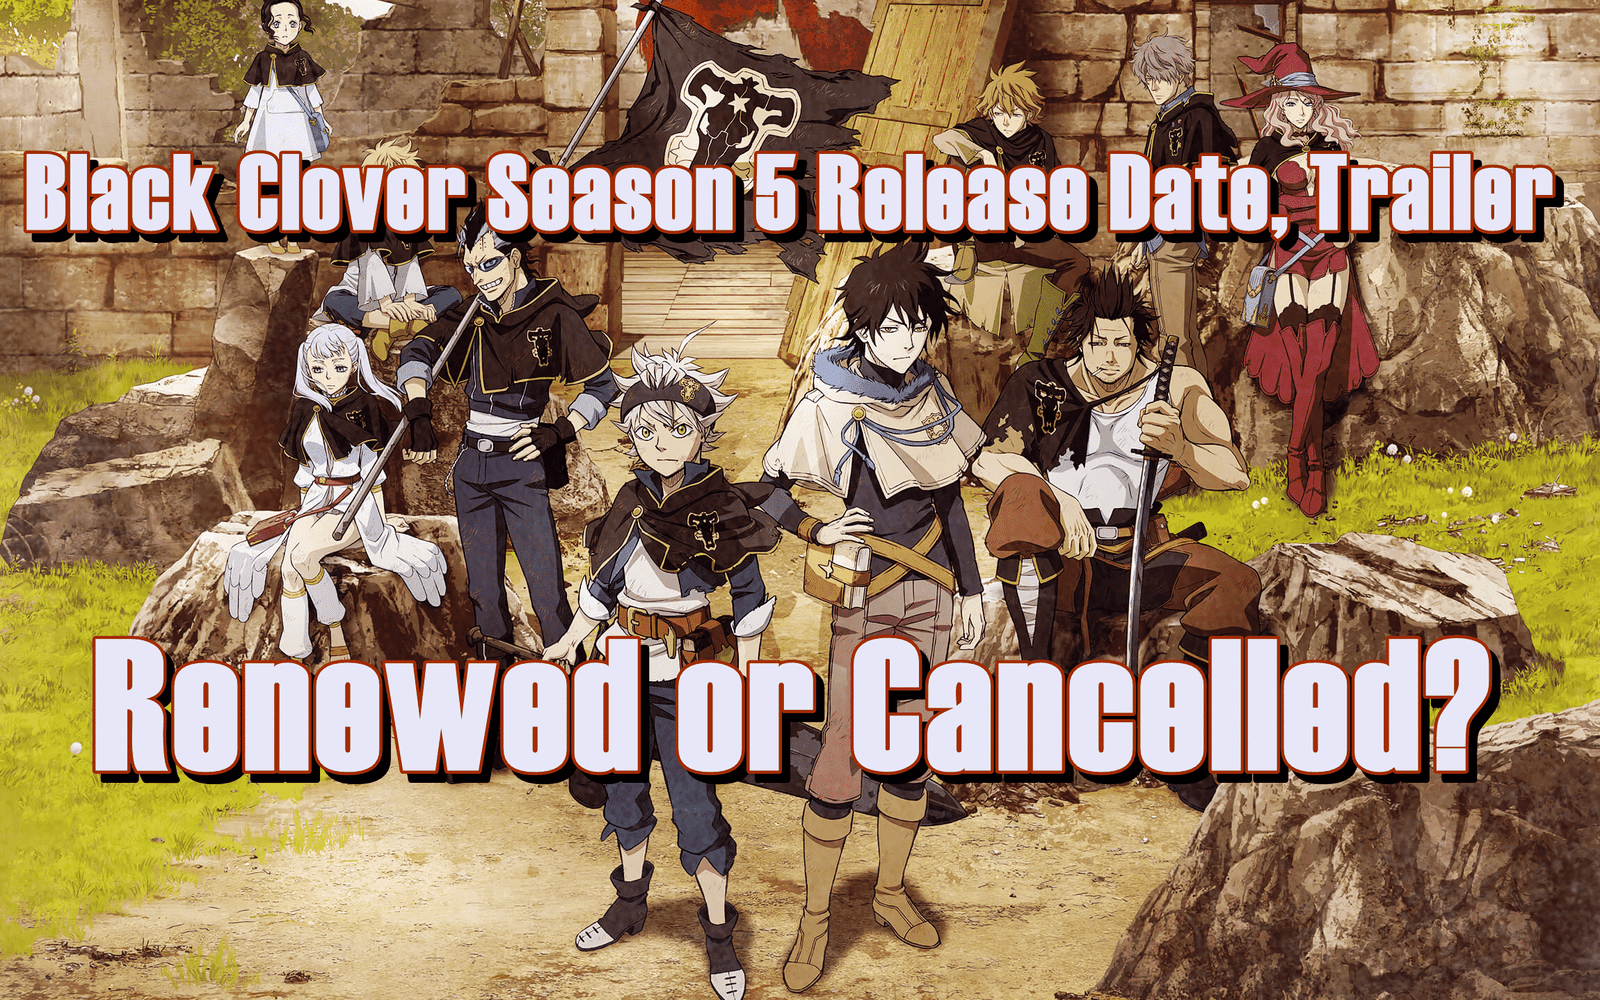 Black Clover Season 5 Release Date - Renewed or Canceled?